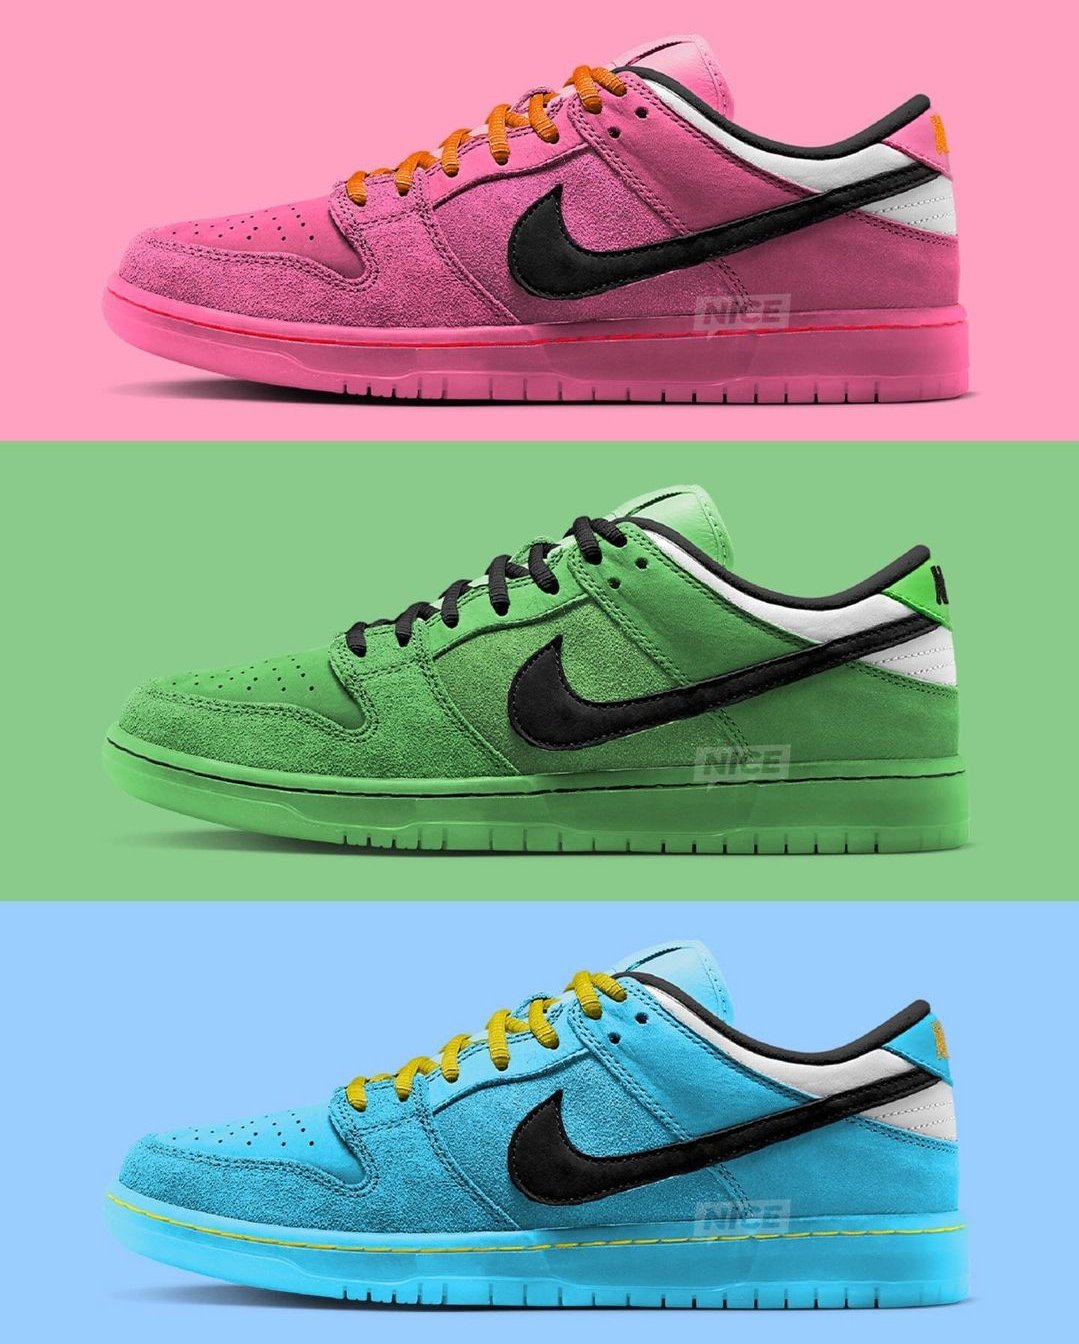 Nadie Mencionar seguro 👁️ Sneaker Visionz 👁️ on Twitter: "Nike SB x The Powerpuff Girls  Releasing Holiday 2023 ❤️💙💚 https://t.co/XR5q9uVauV" / Twitter